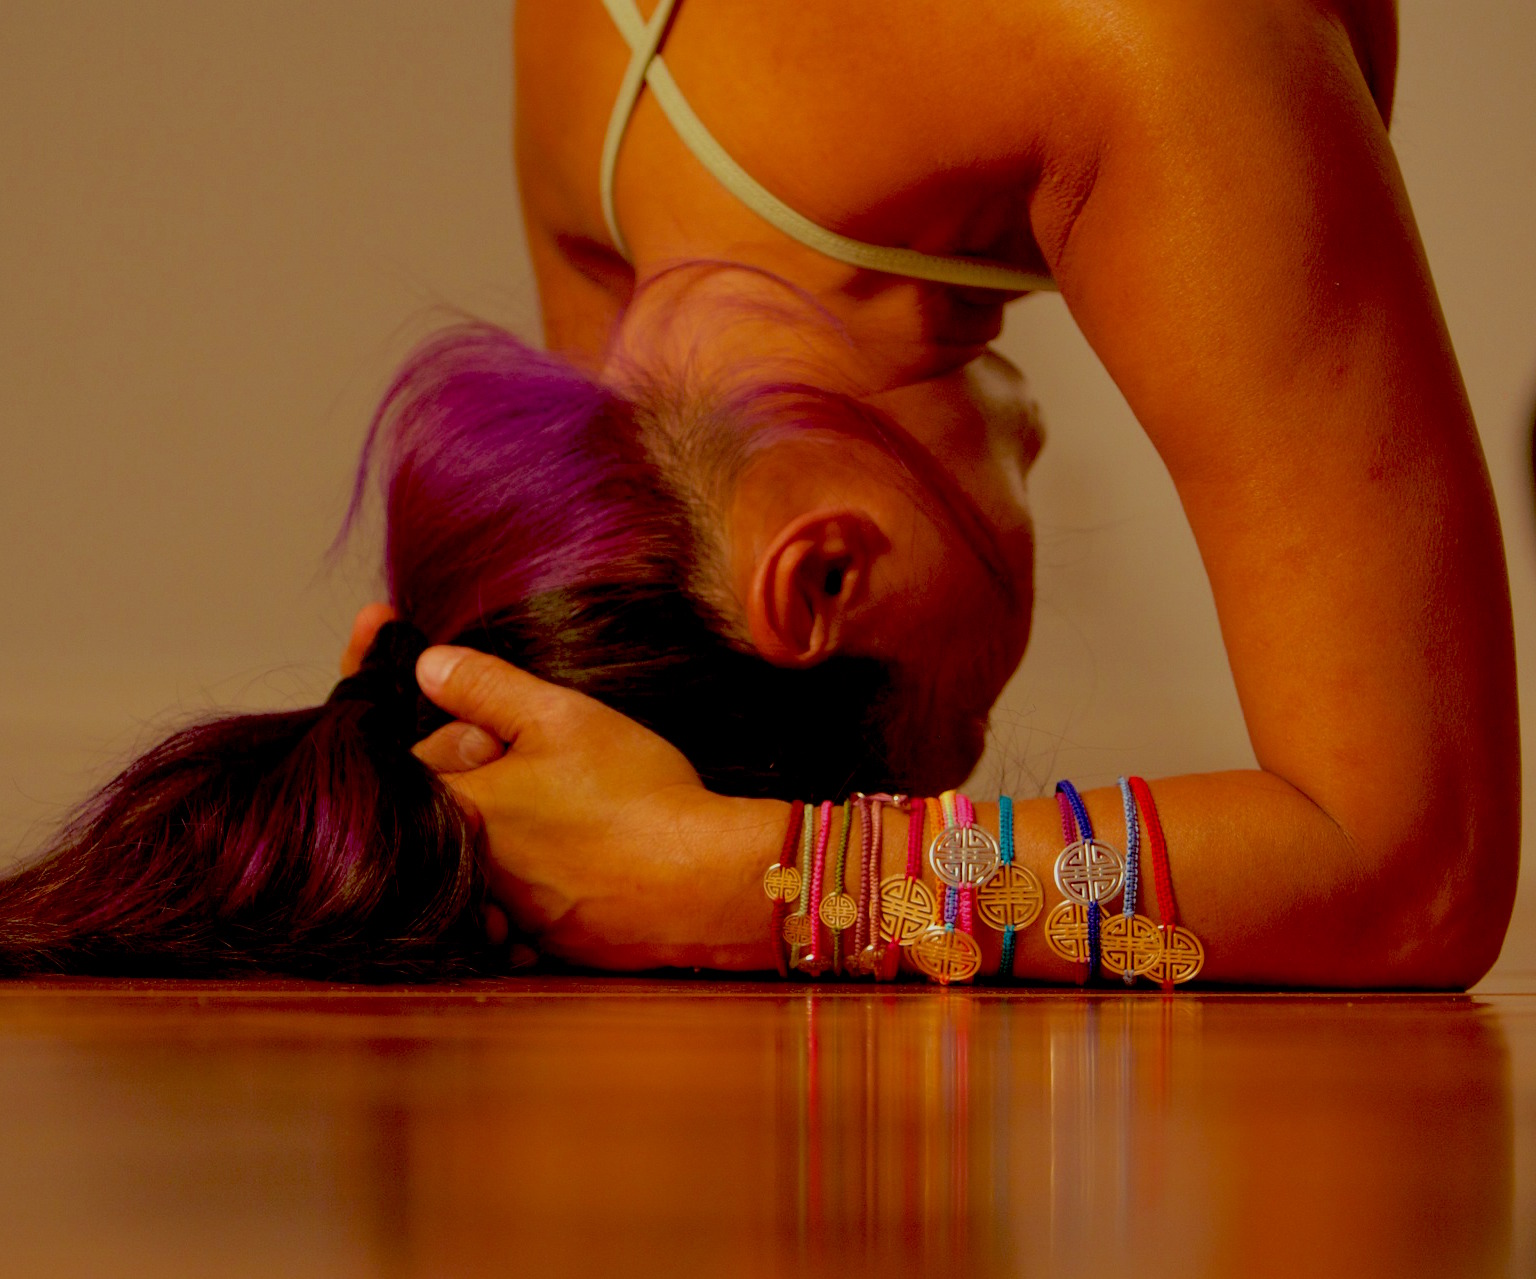 Headstand yoga